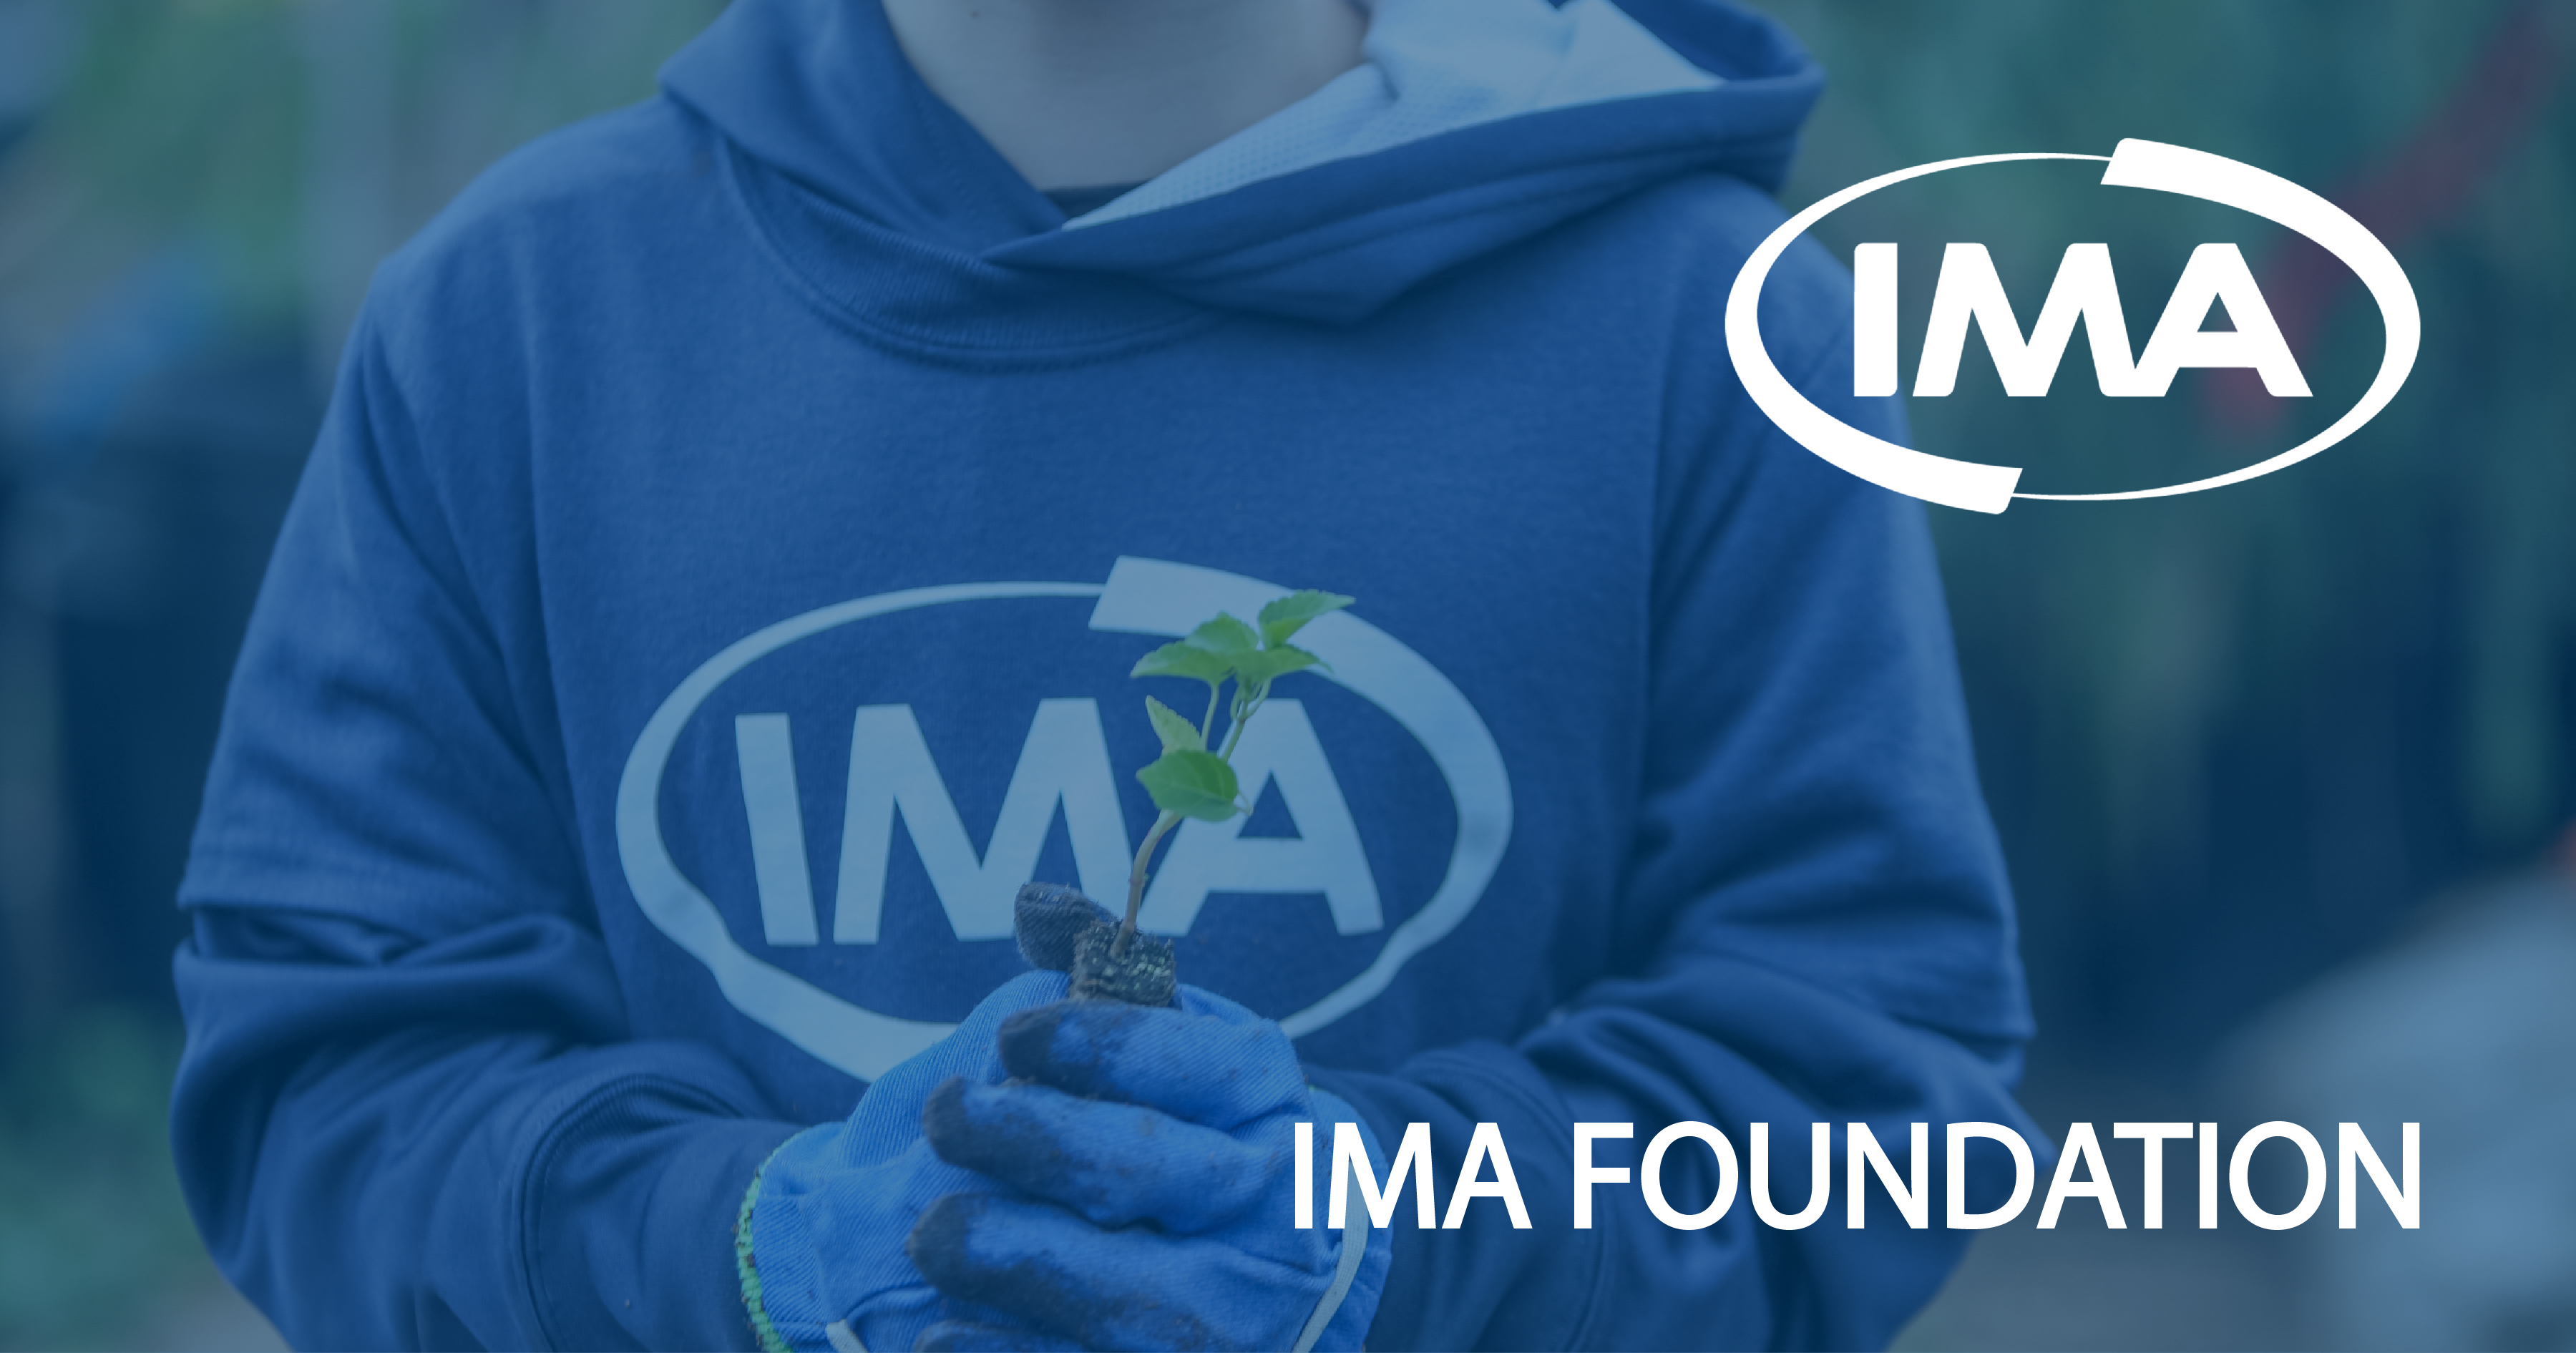 IMA Foundation - IMA Financial Group